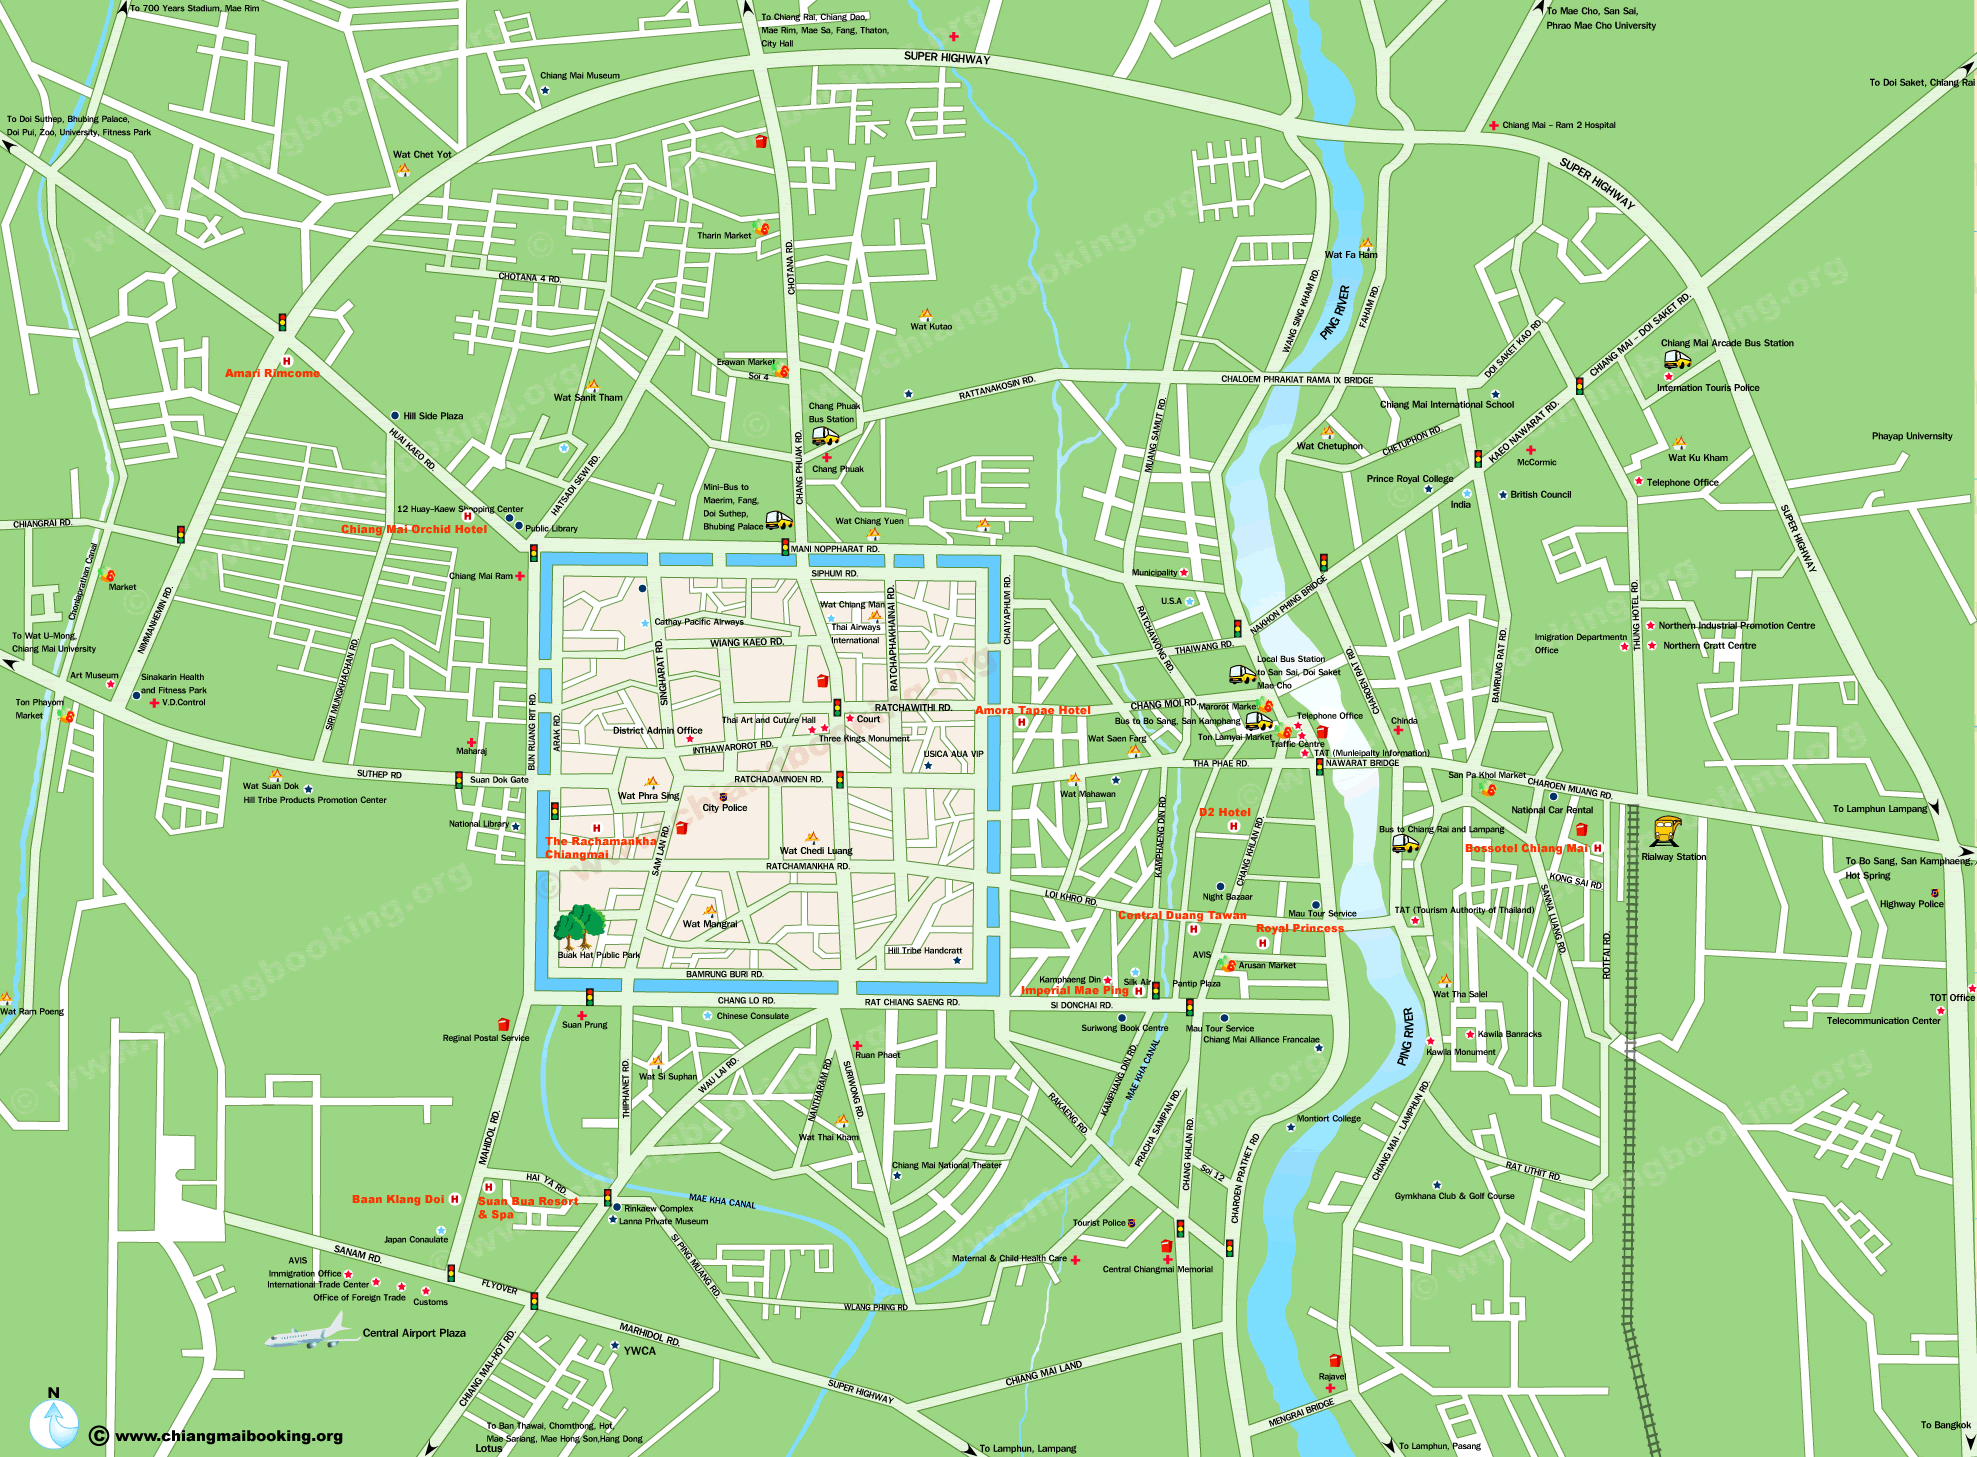 Chiang Mai city center map